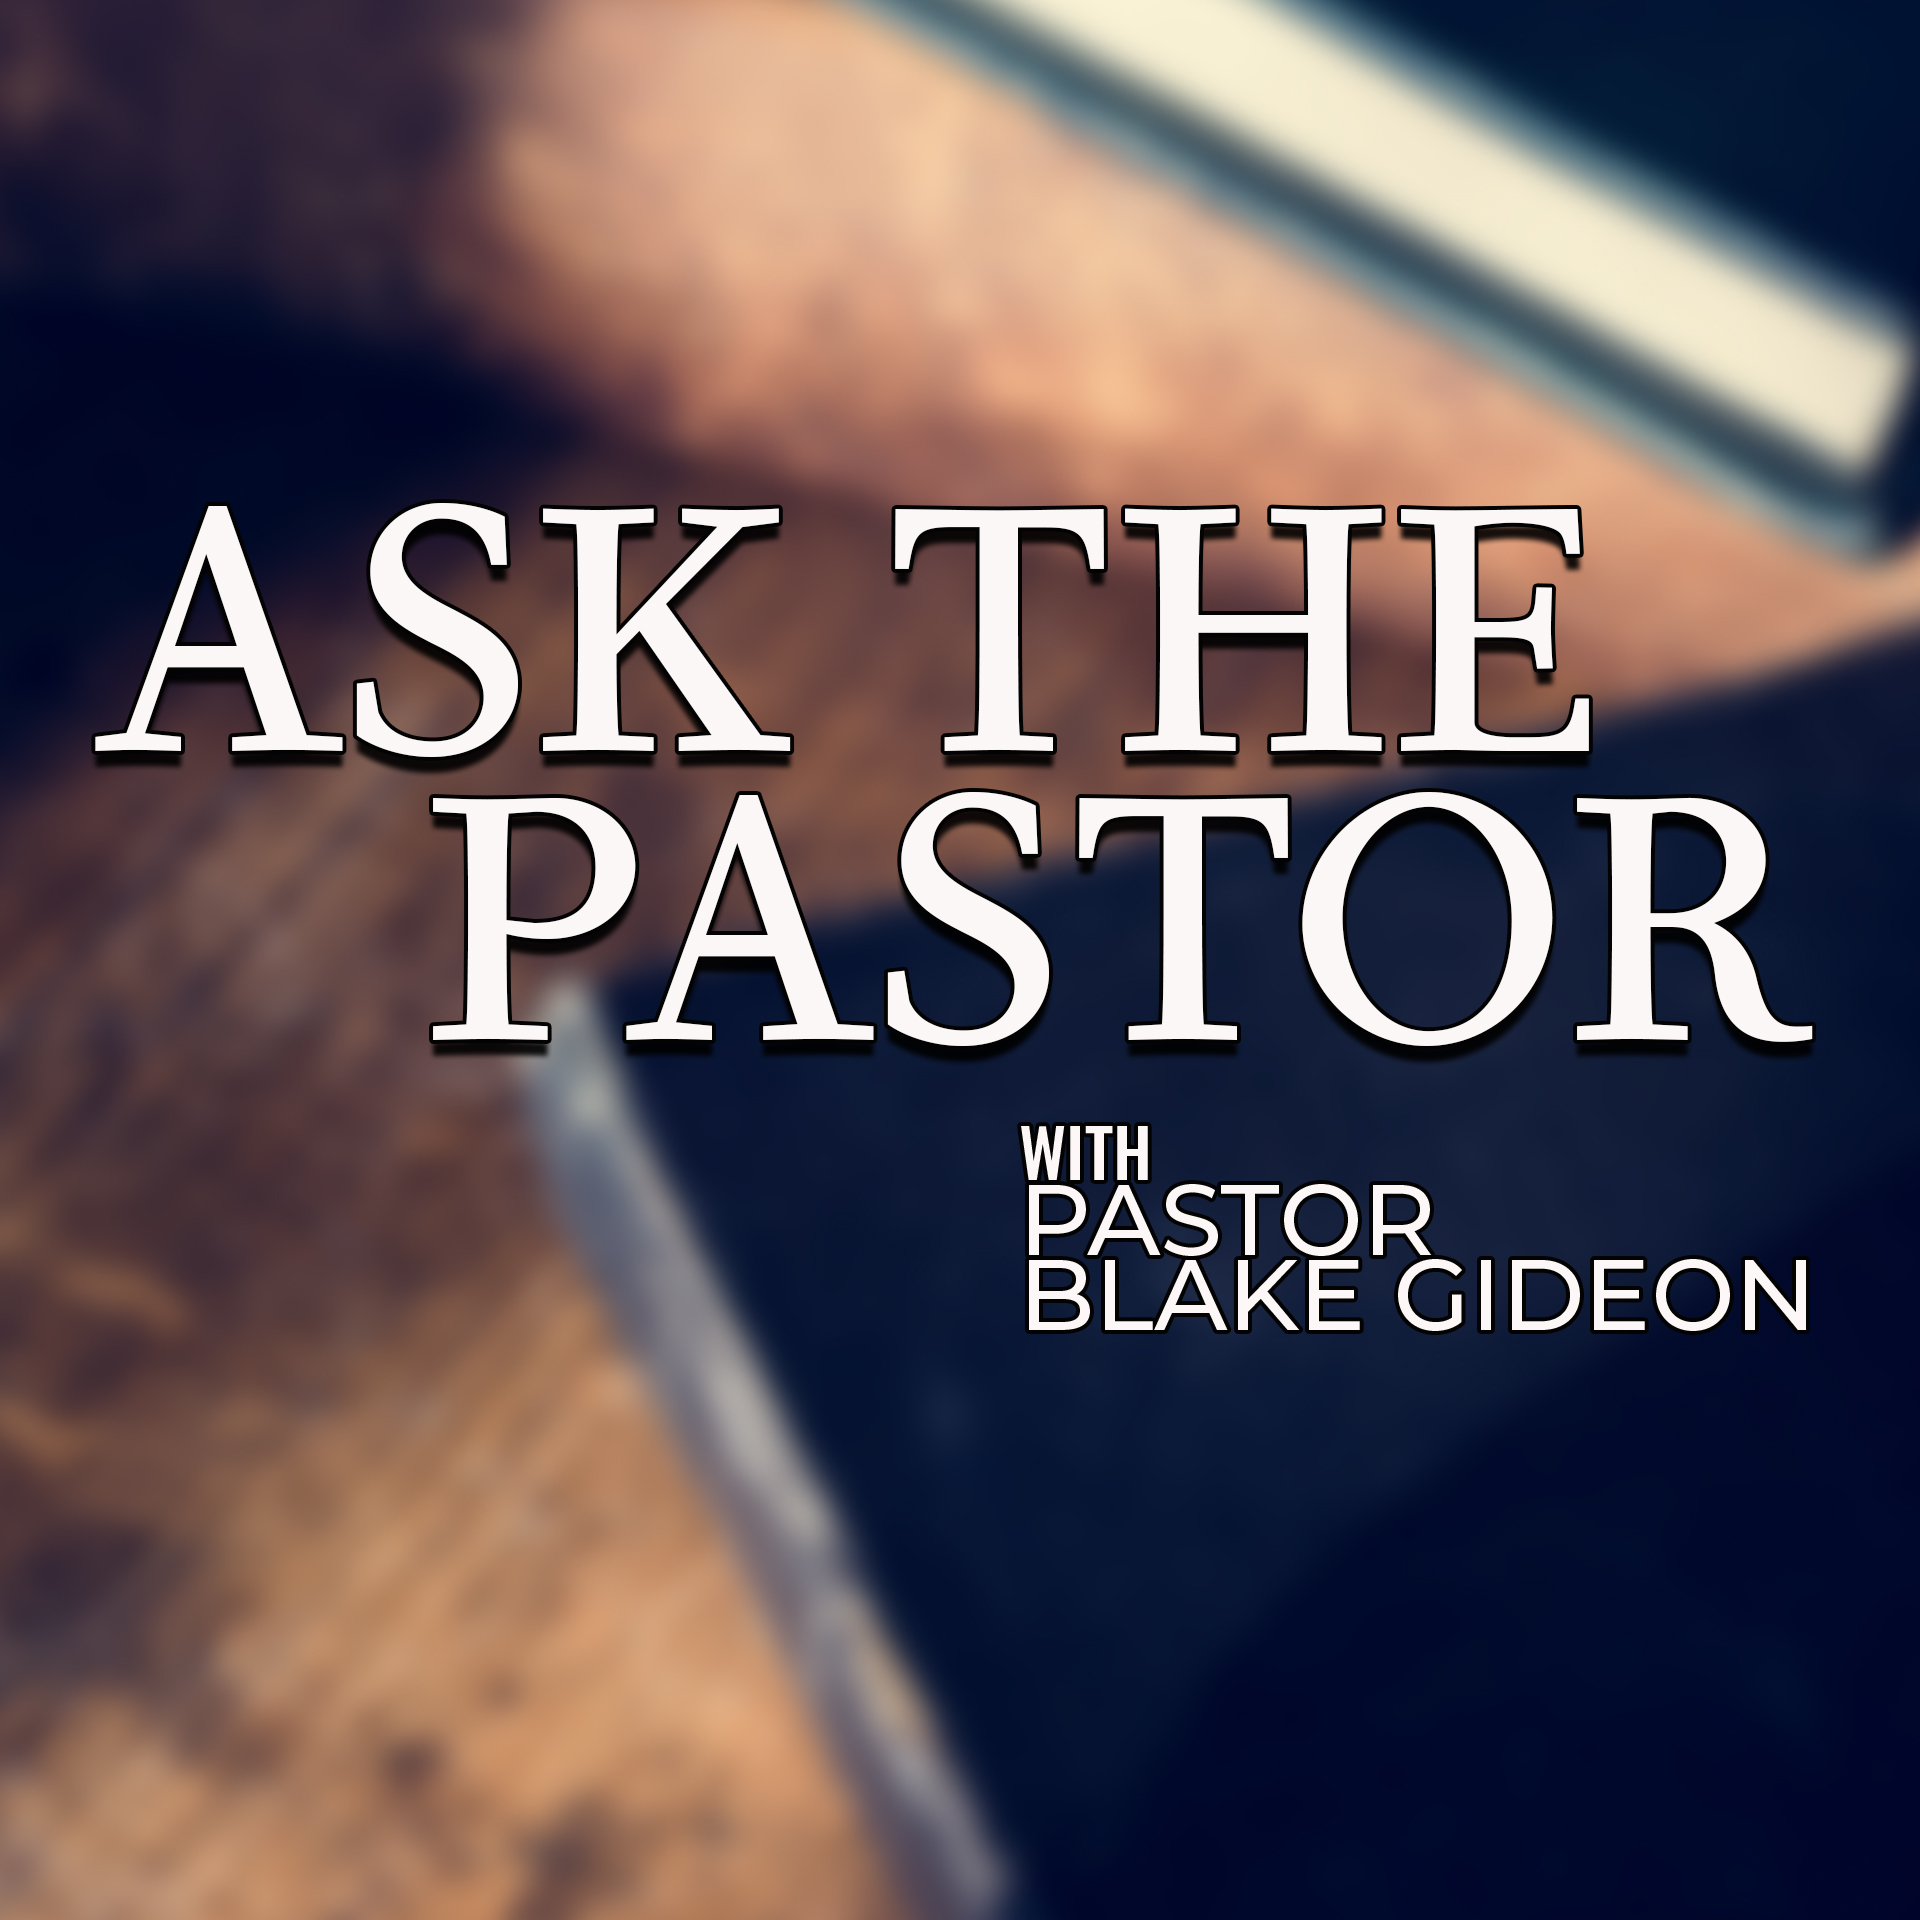 Askk the Pastor, July 6th